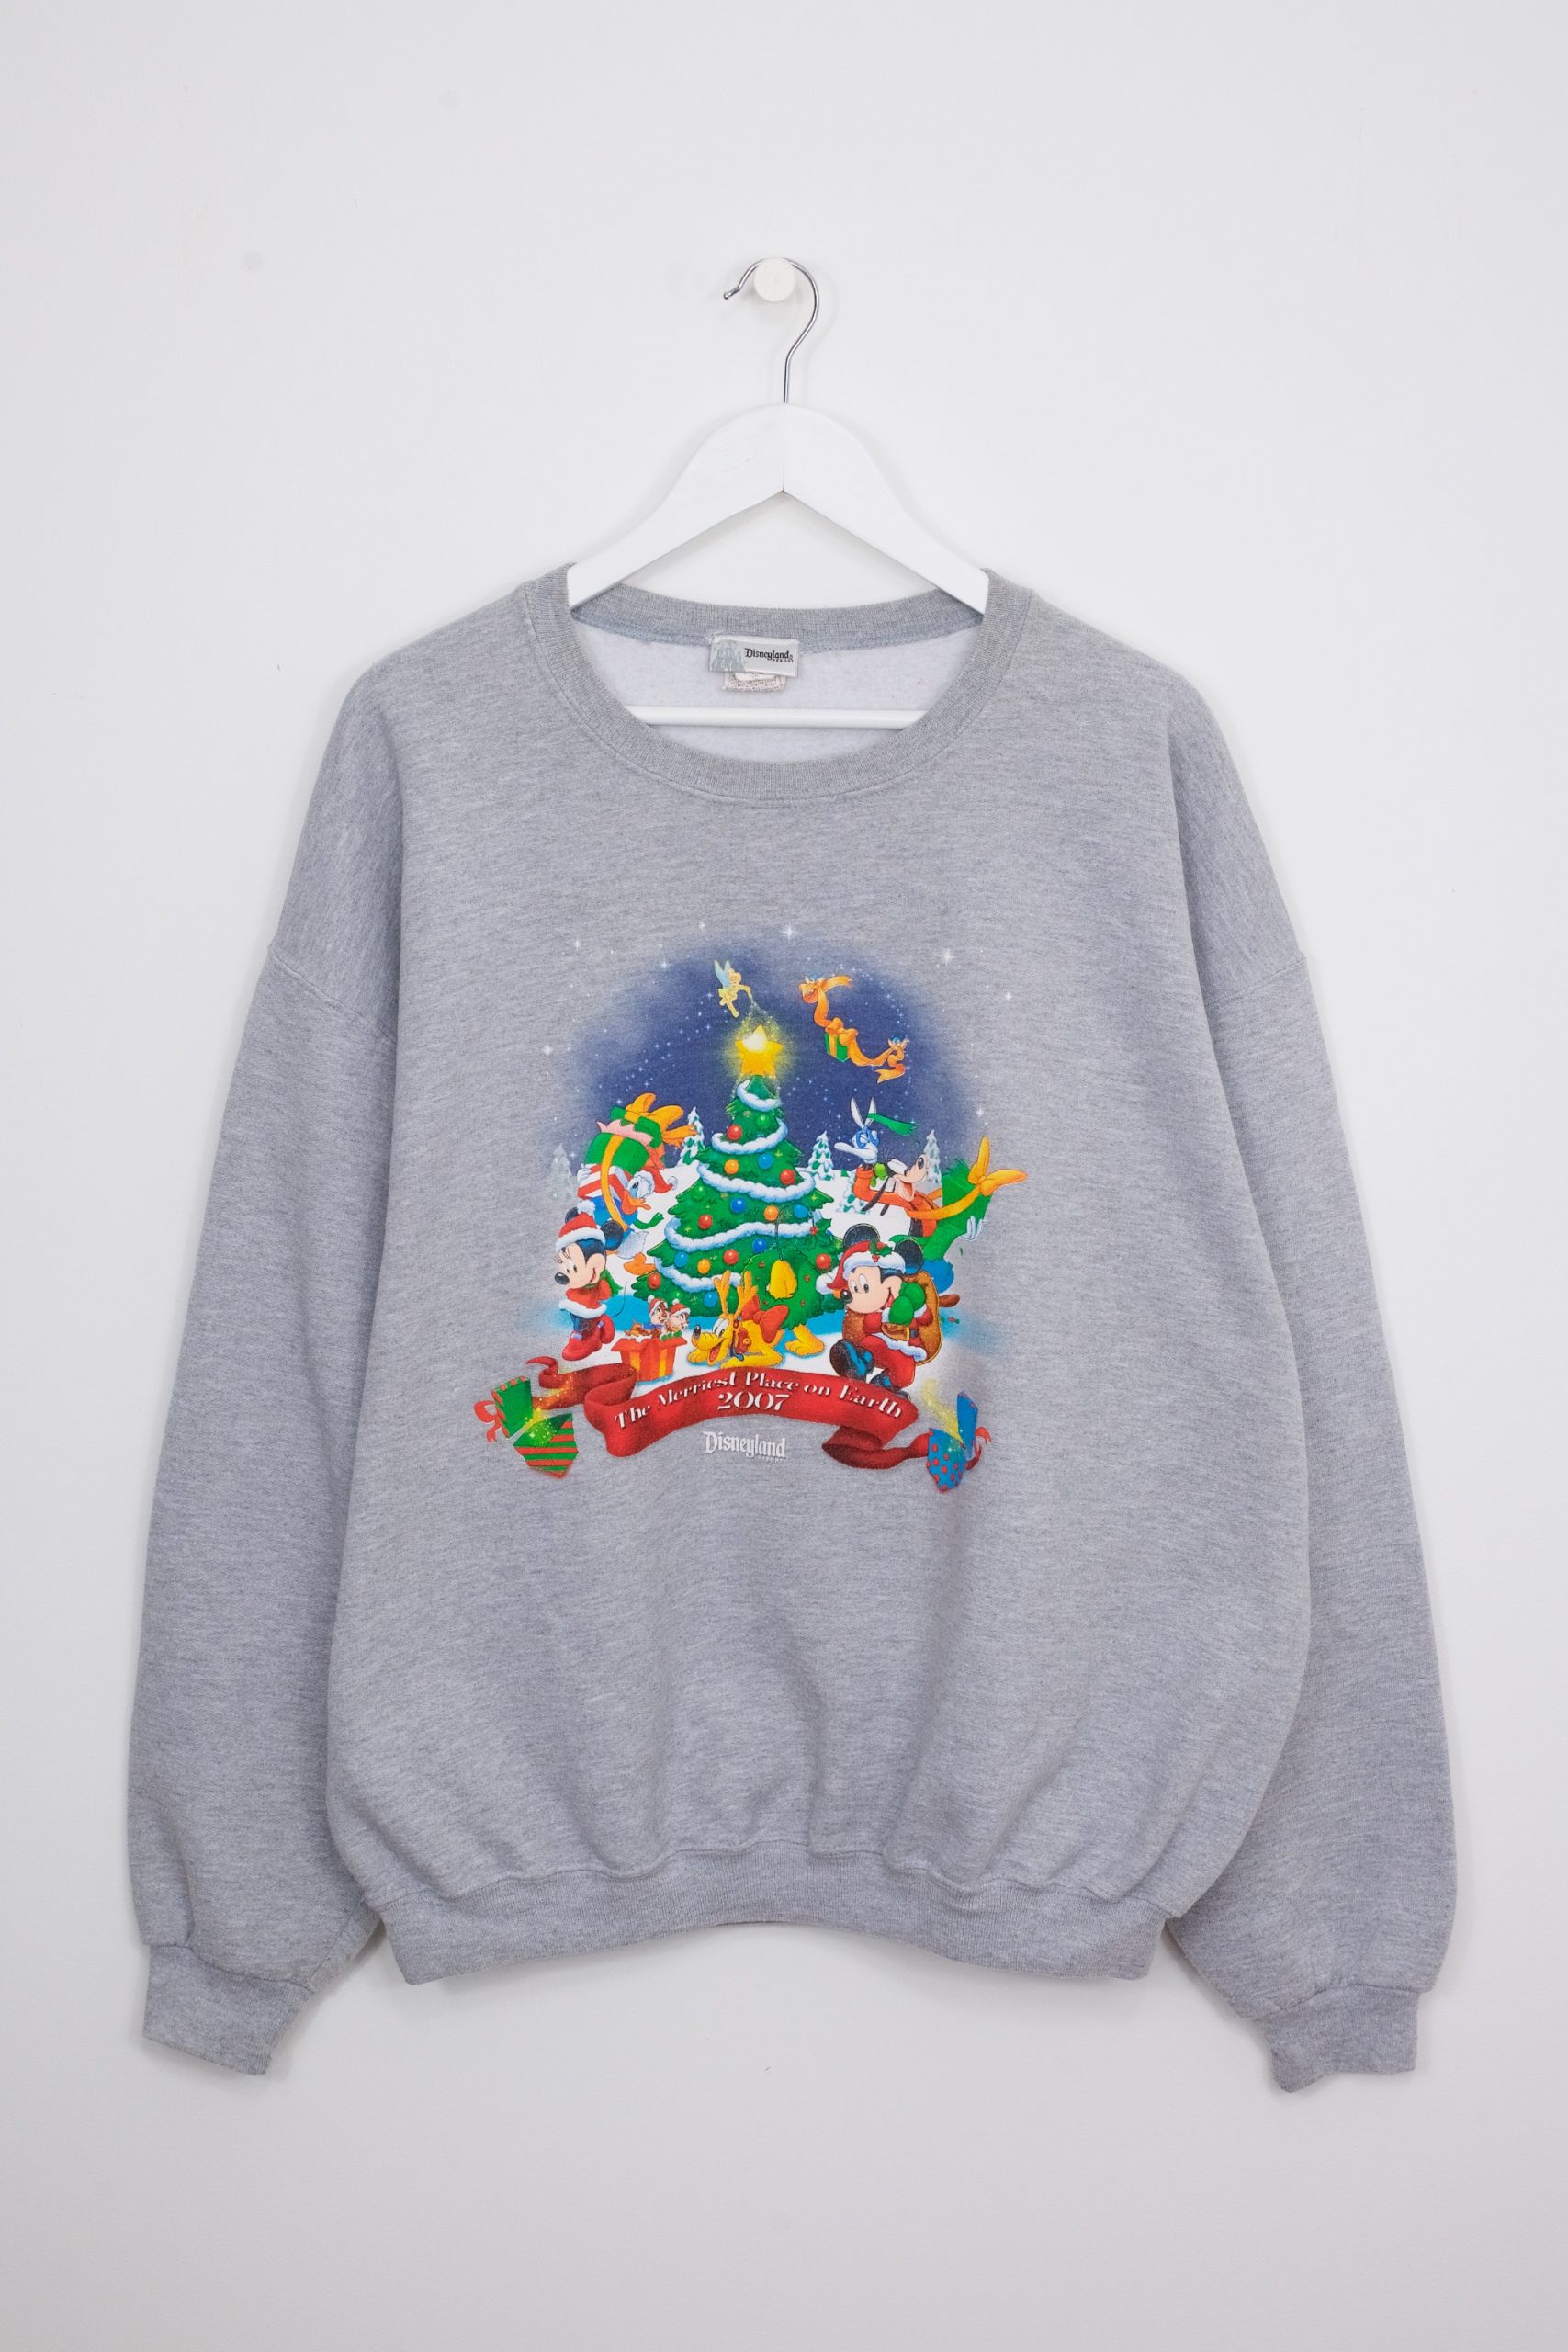 Disneyworld Vintage Christmas Sweater | Save the Children Shop